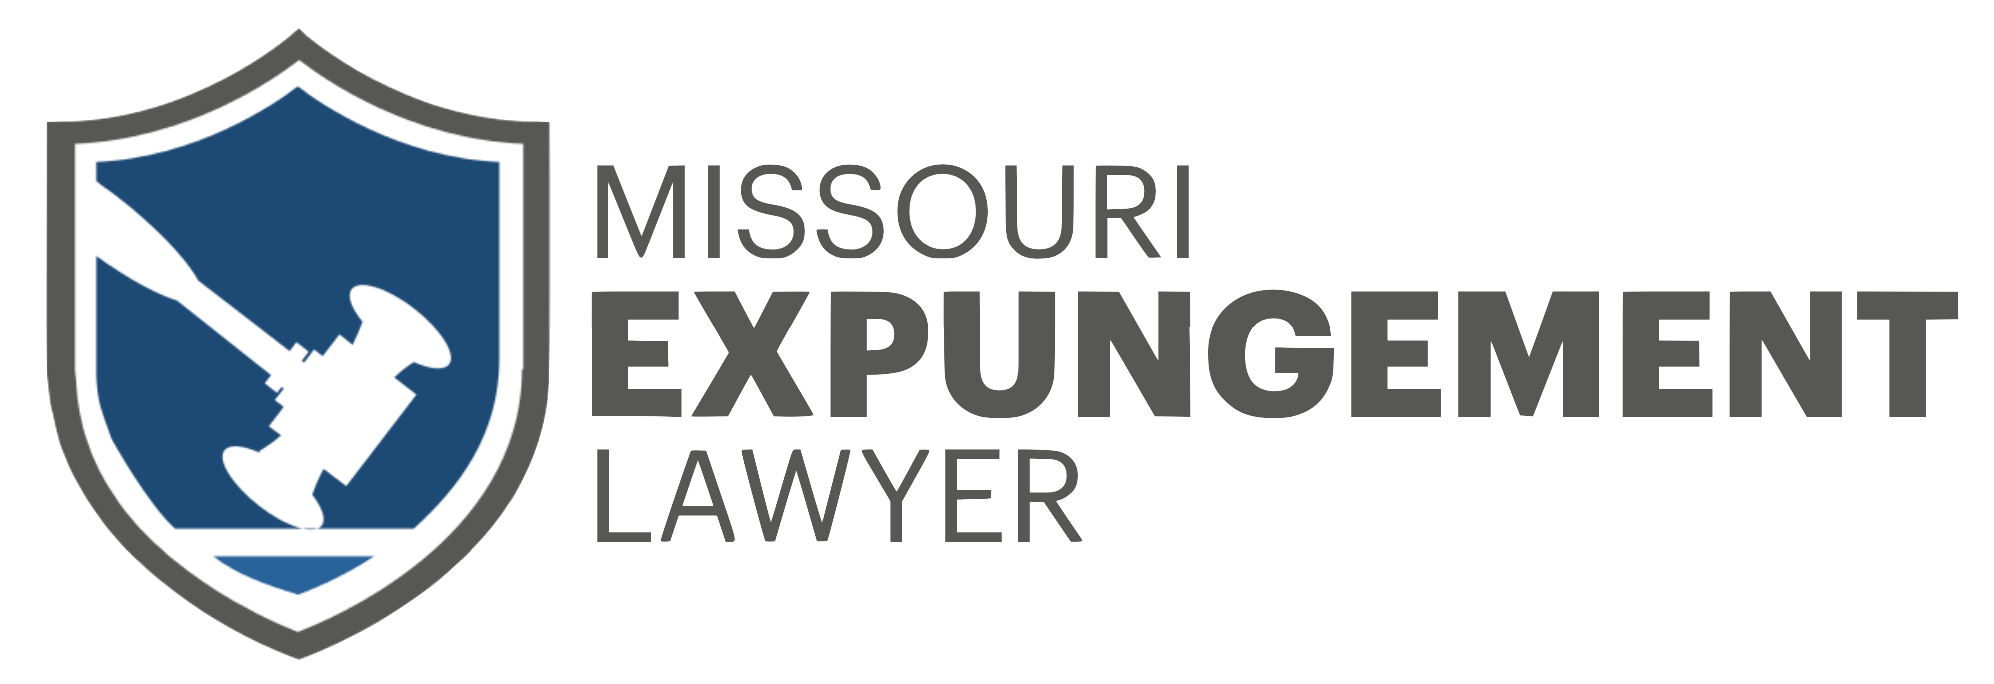 Missouri Expungement Lawyer